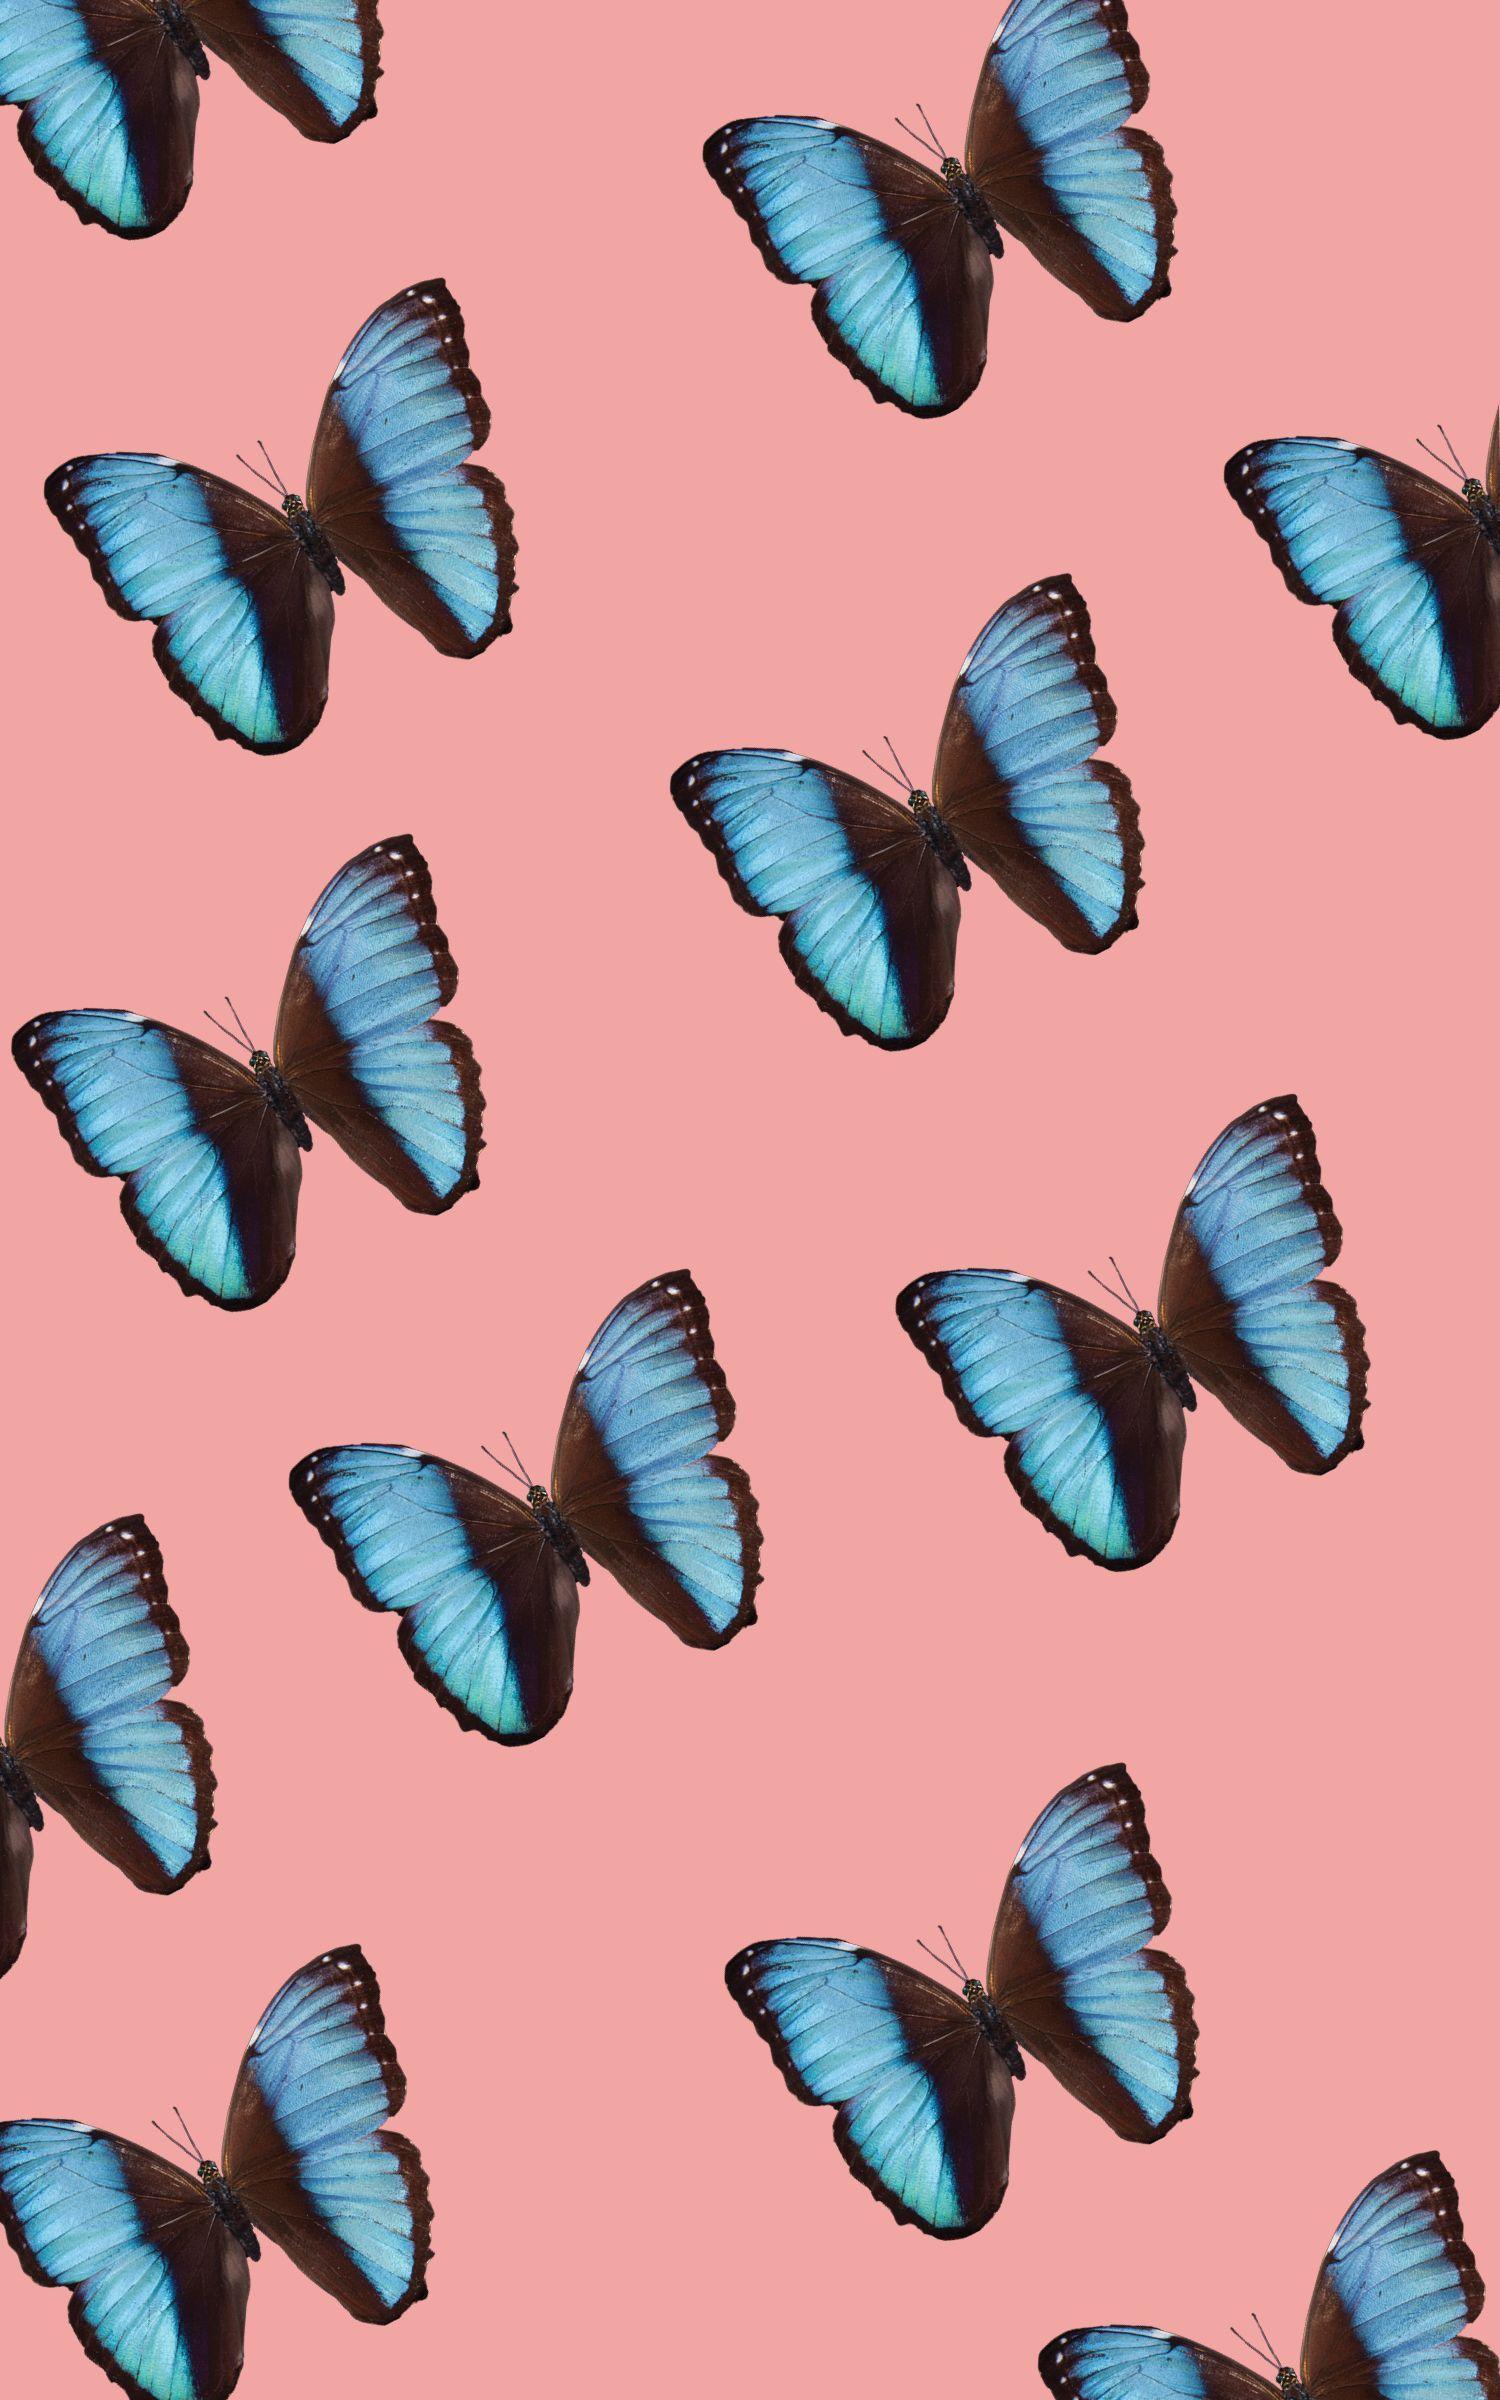 VSCO Butterfly Wallpapers - Top Free VSCO Butterfly Backgrounds ...